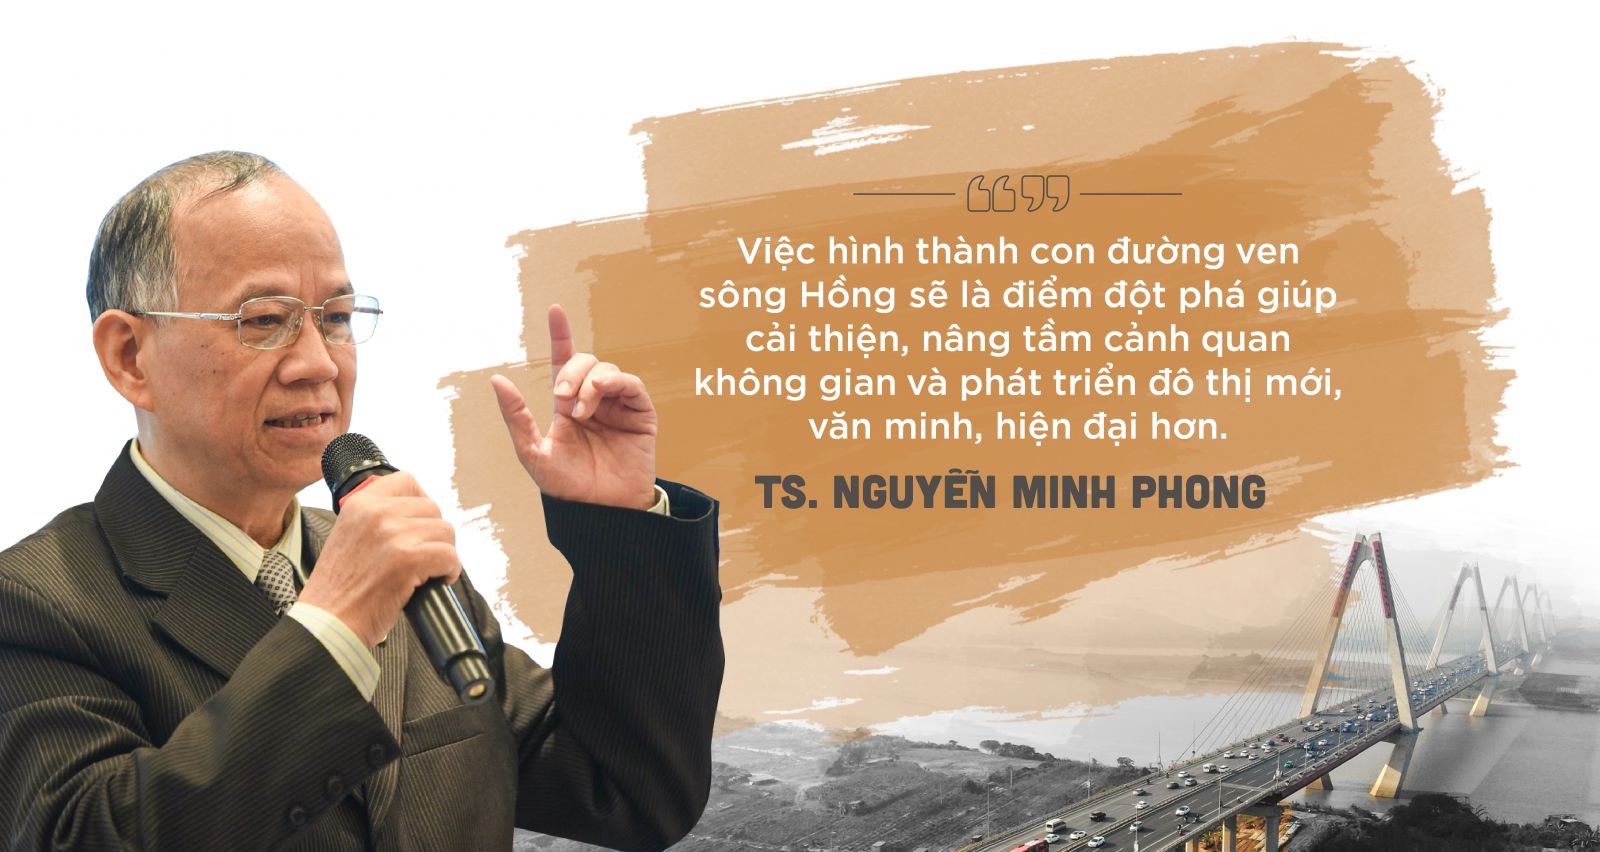 Tiến sĩ Nguyễn Minh Phong